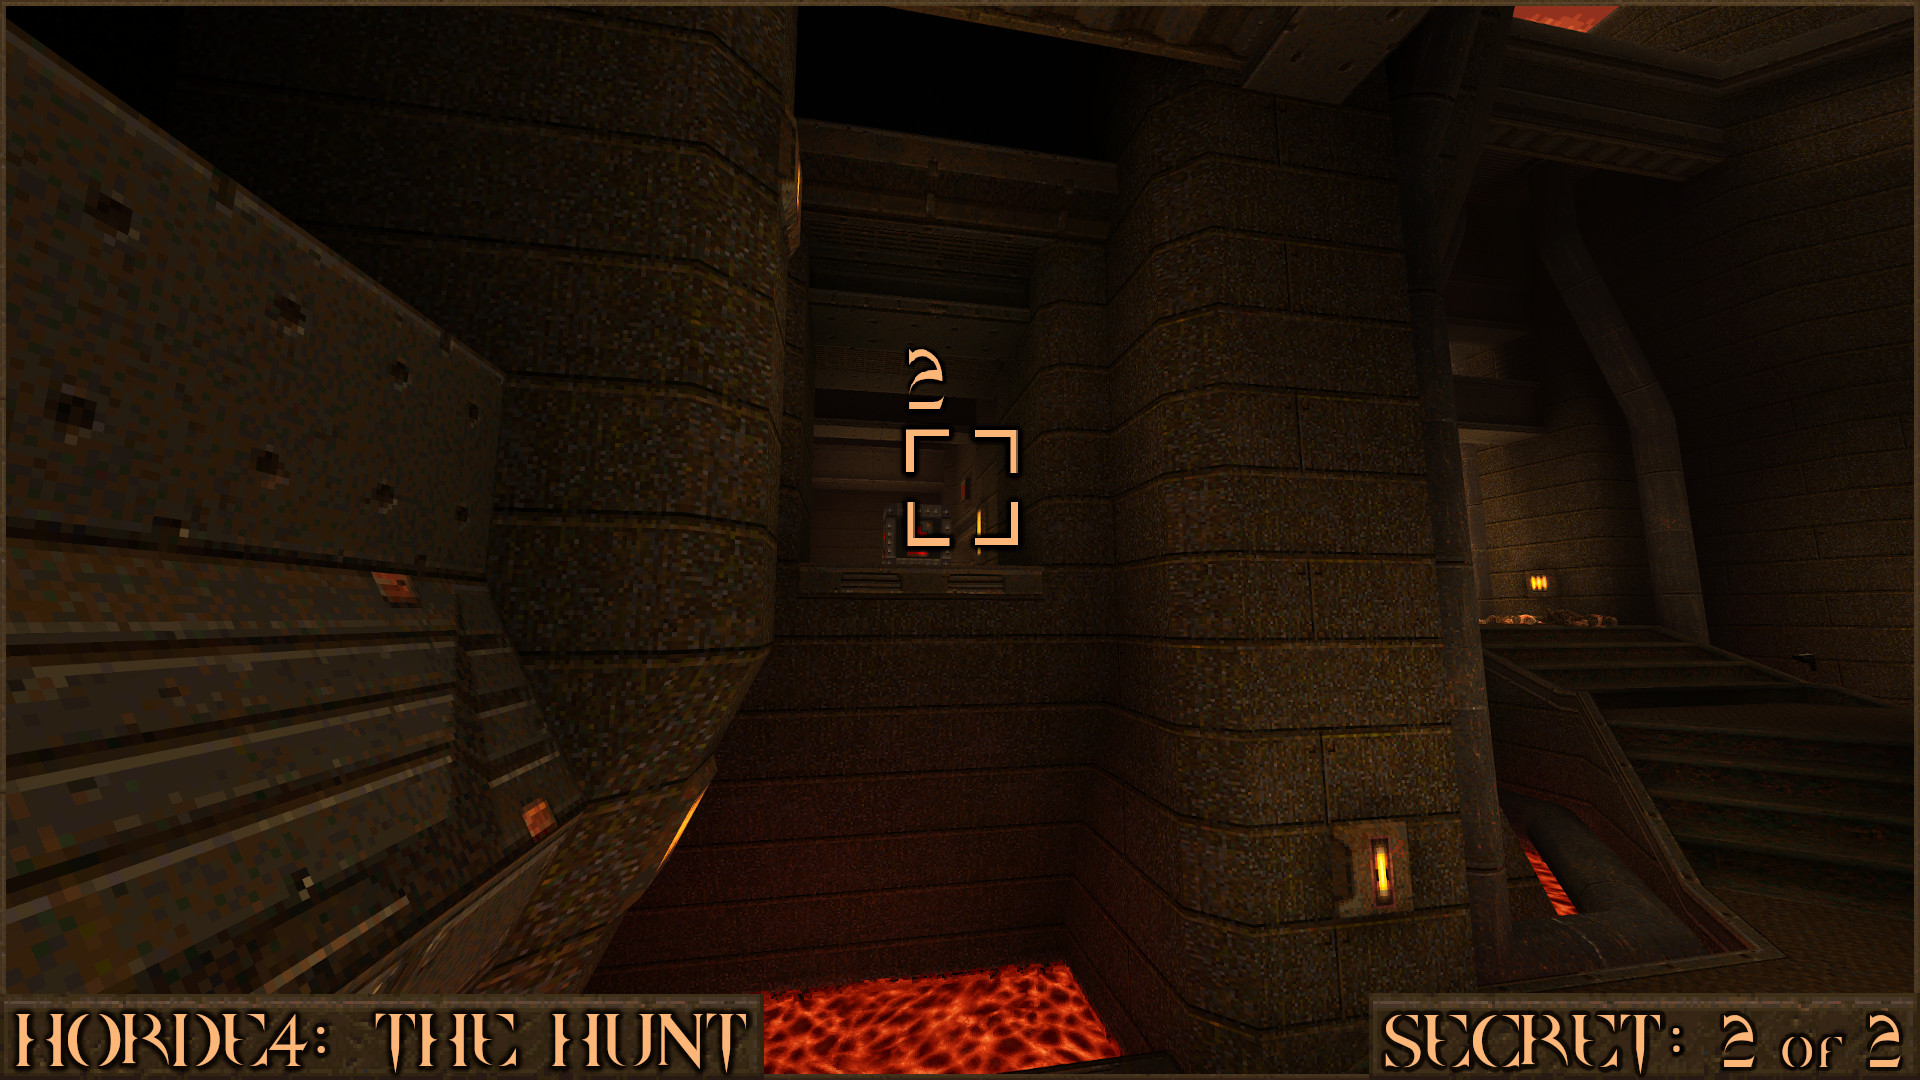 Quake - Finding all the Secrets - HORDE4: The Hunt - DBECC47